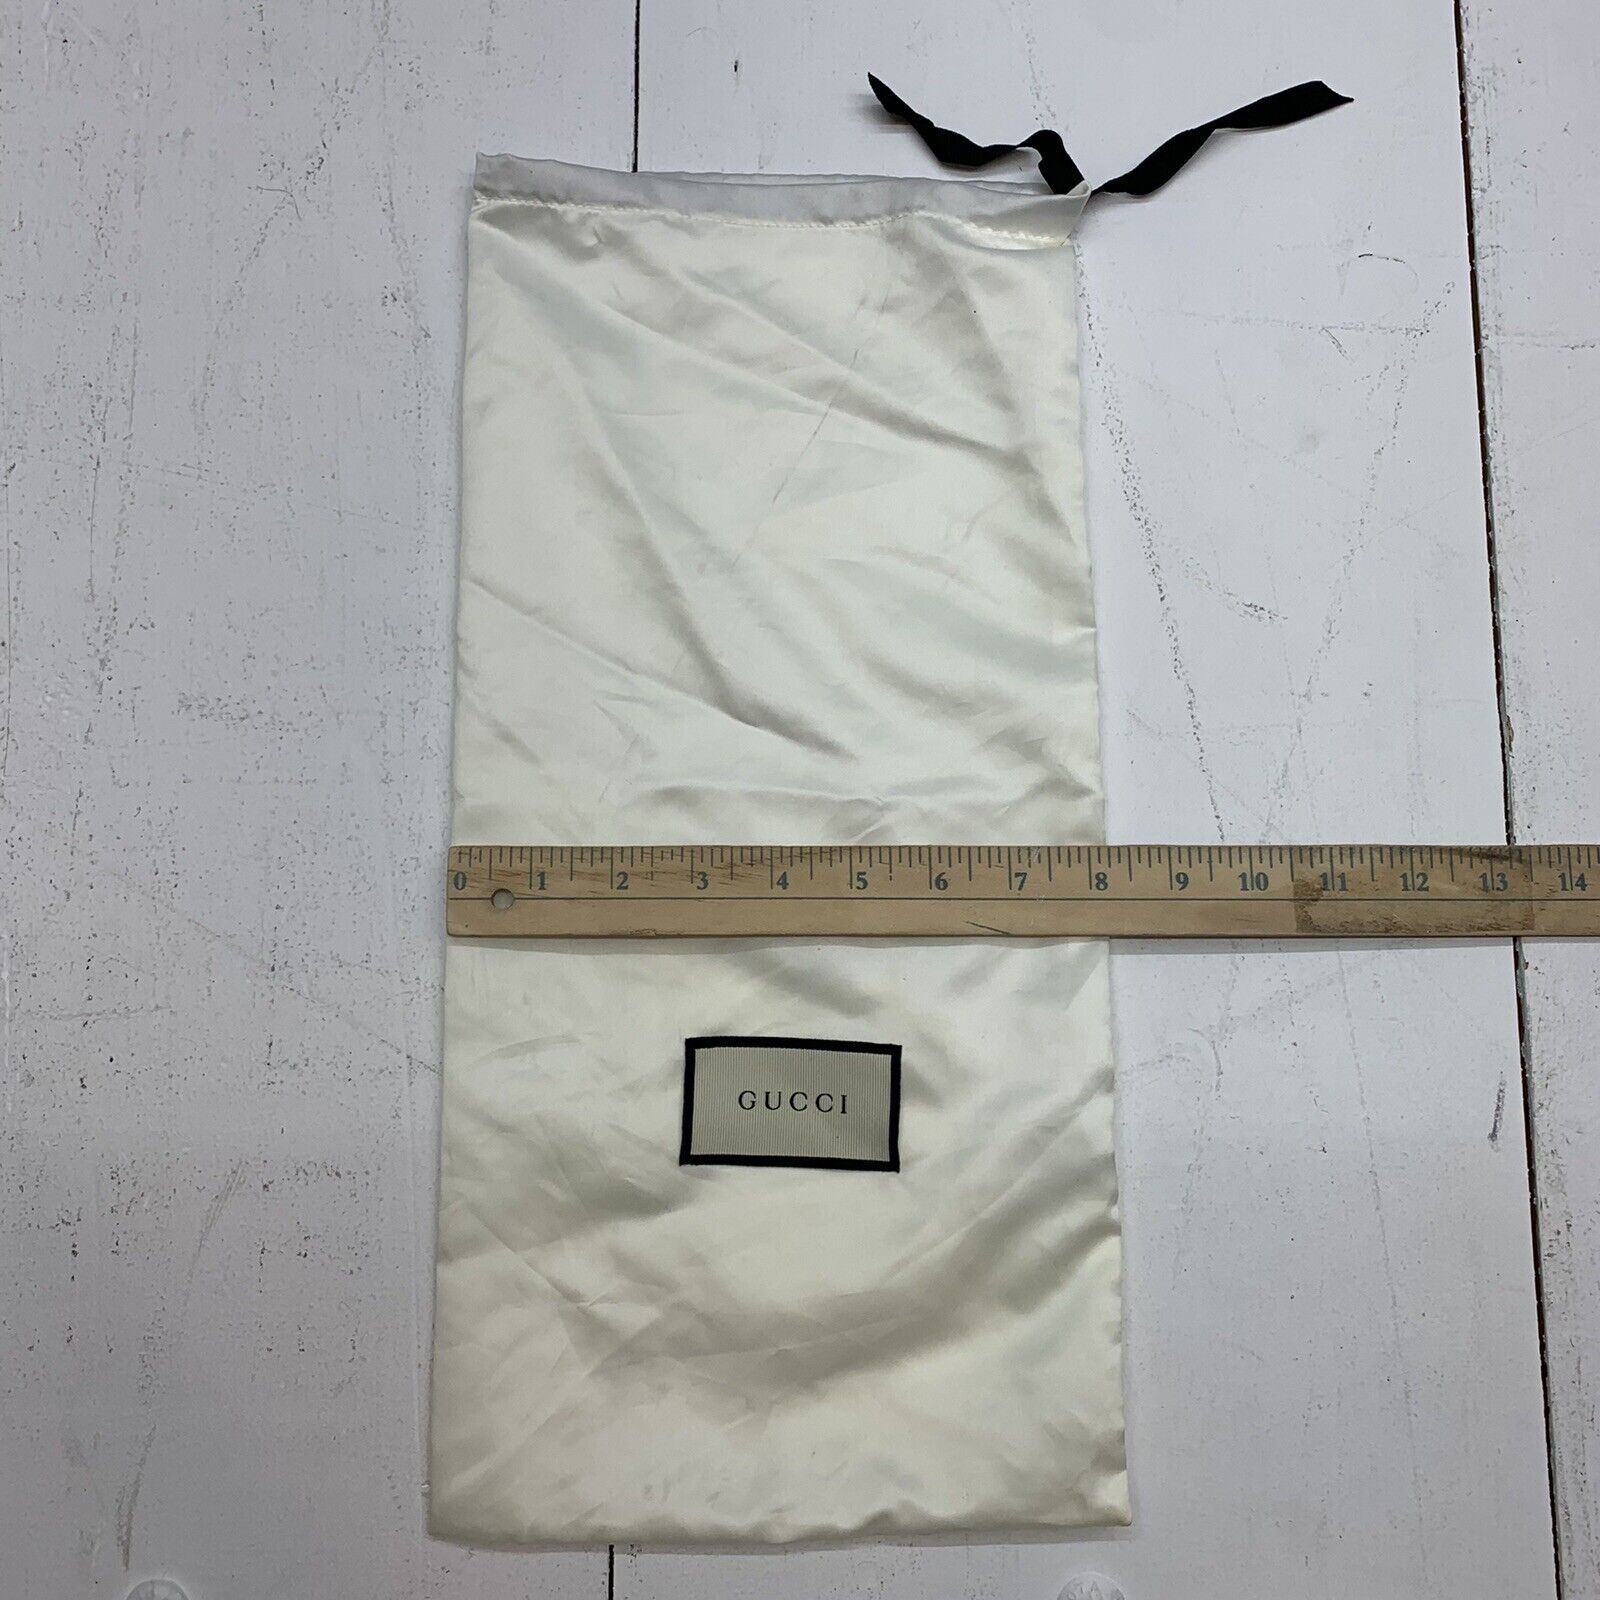 Gucci 17x8 inch drawstring dust bag - beyond exchange